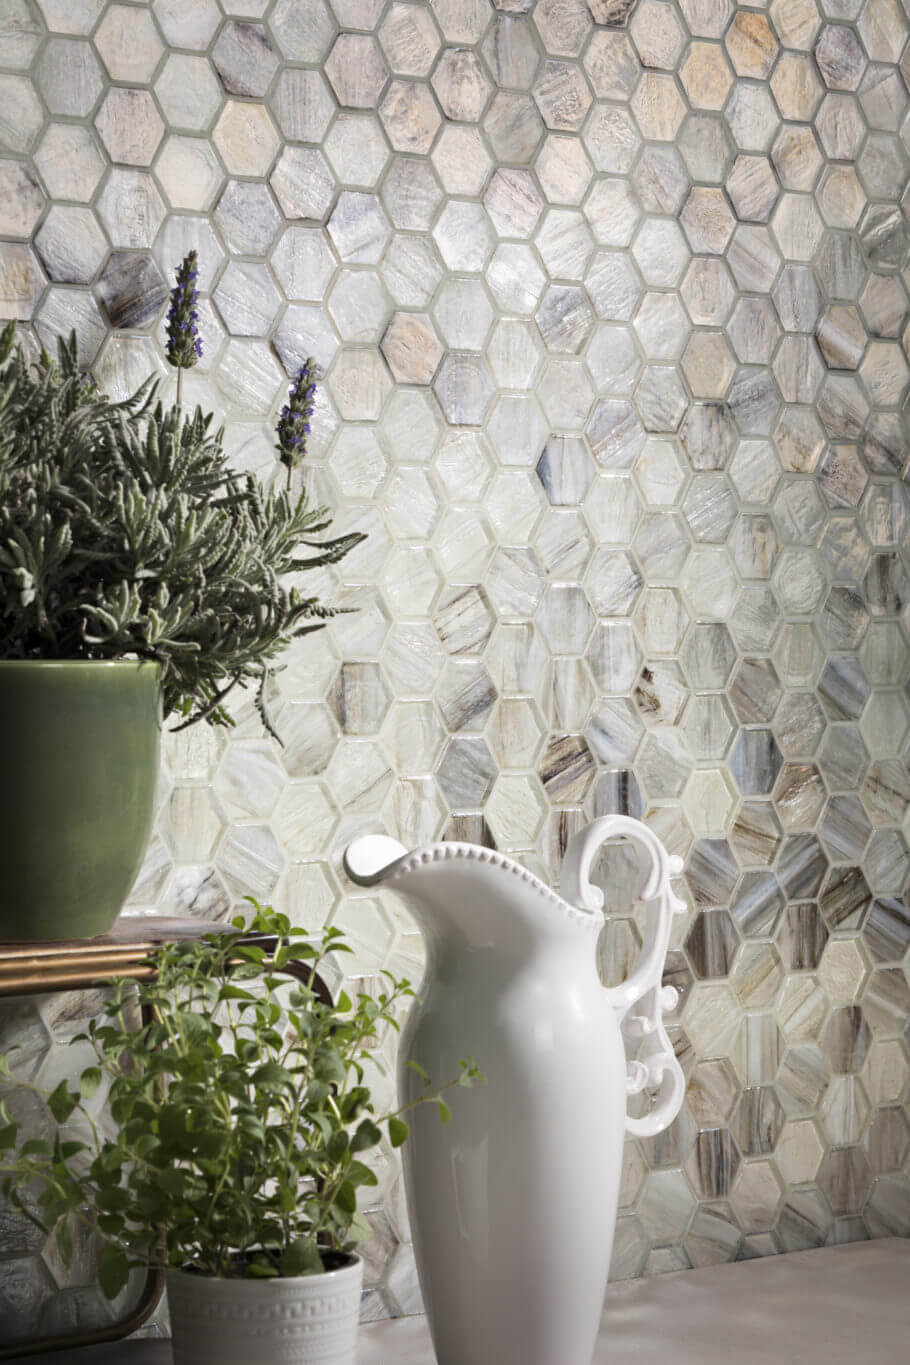 Textured hexagon tile mosaic